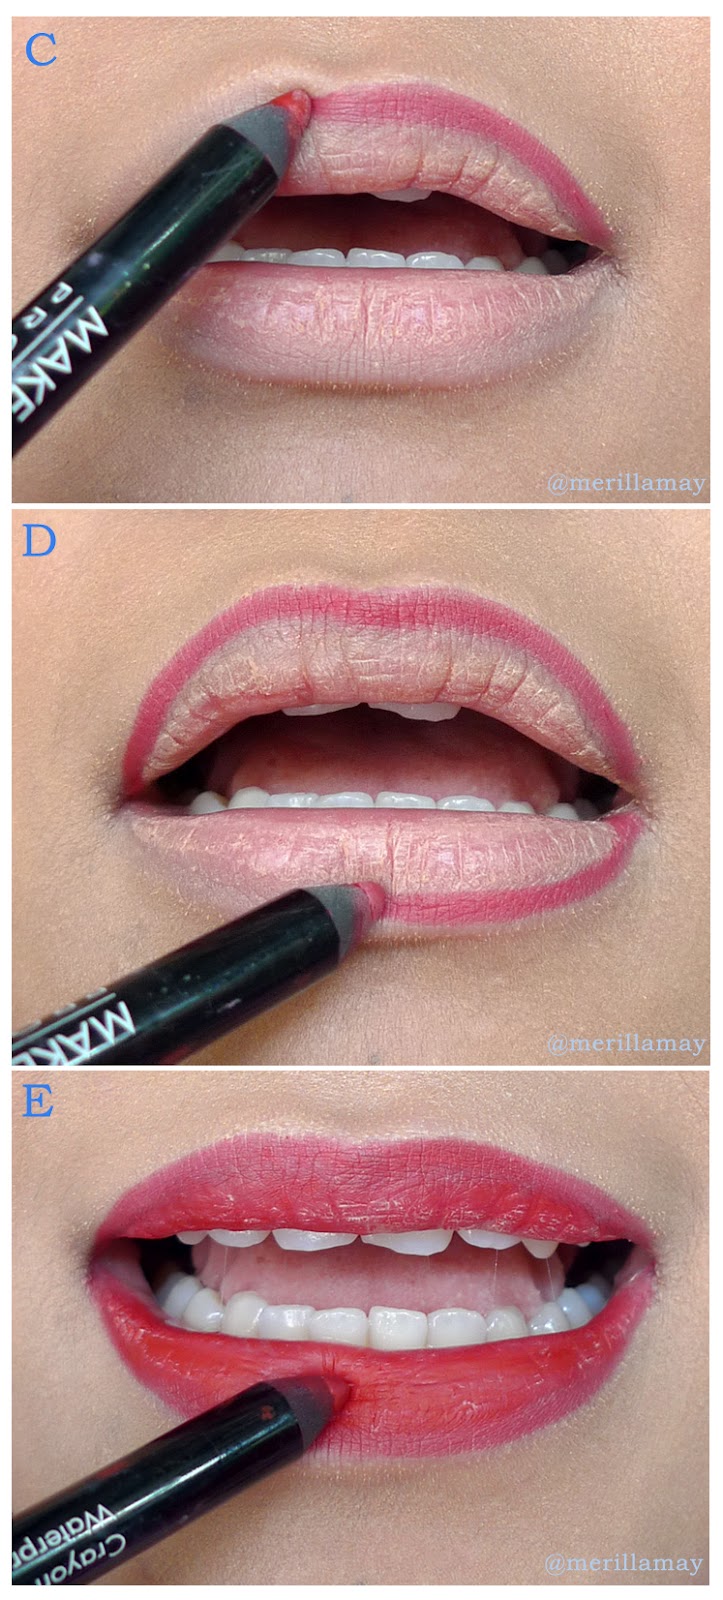 Merilla Mays Blog Tutorial Red Lips That Kills